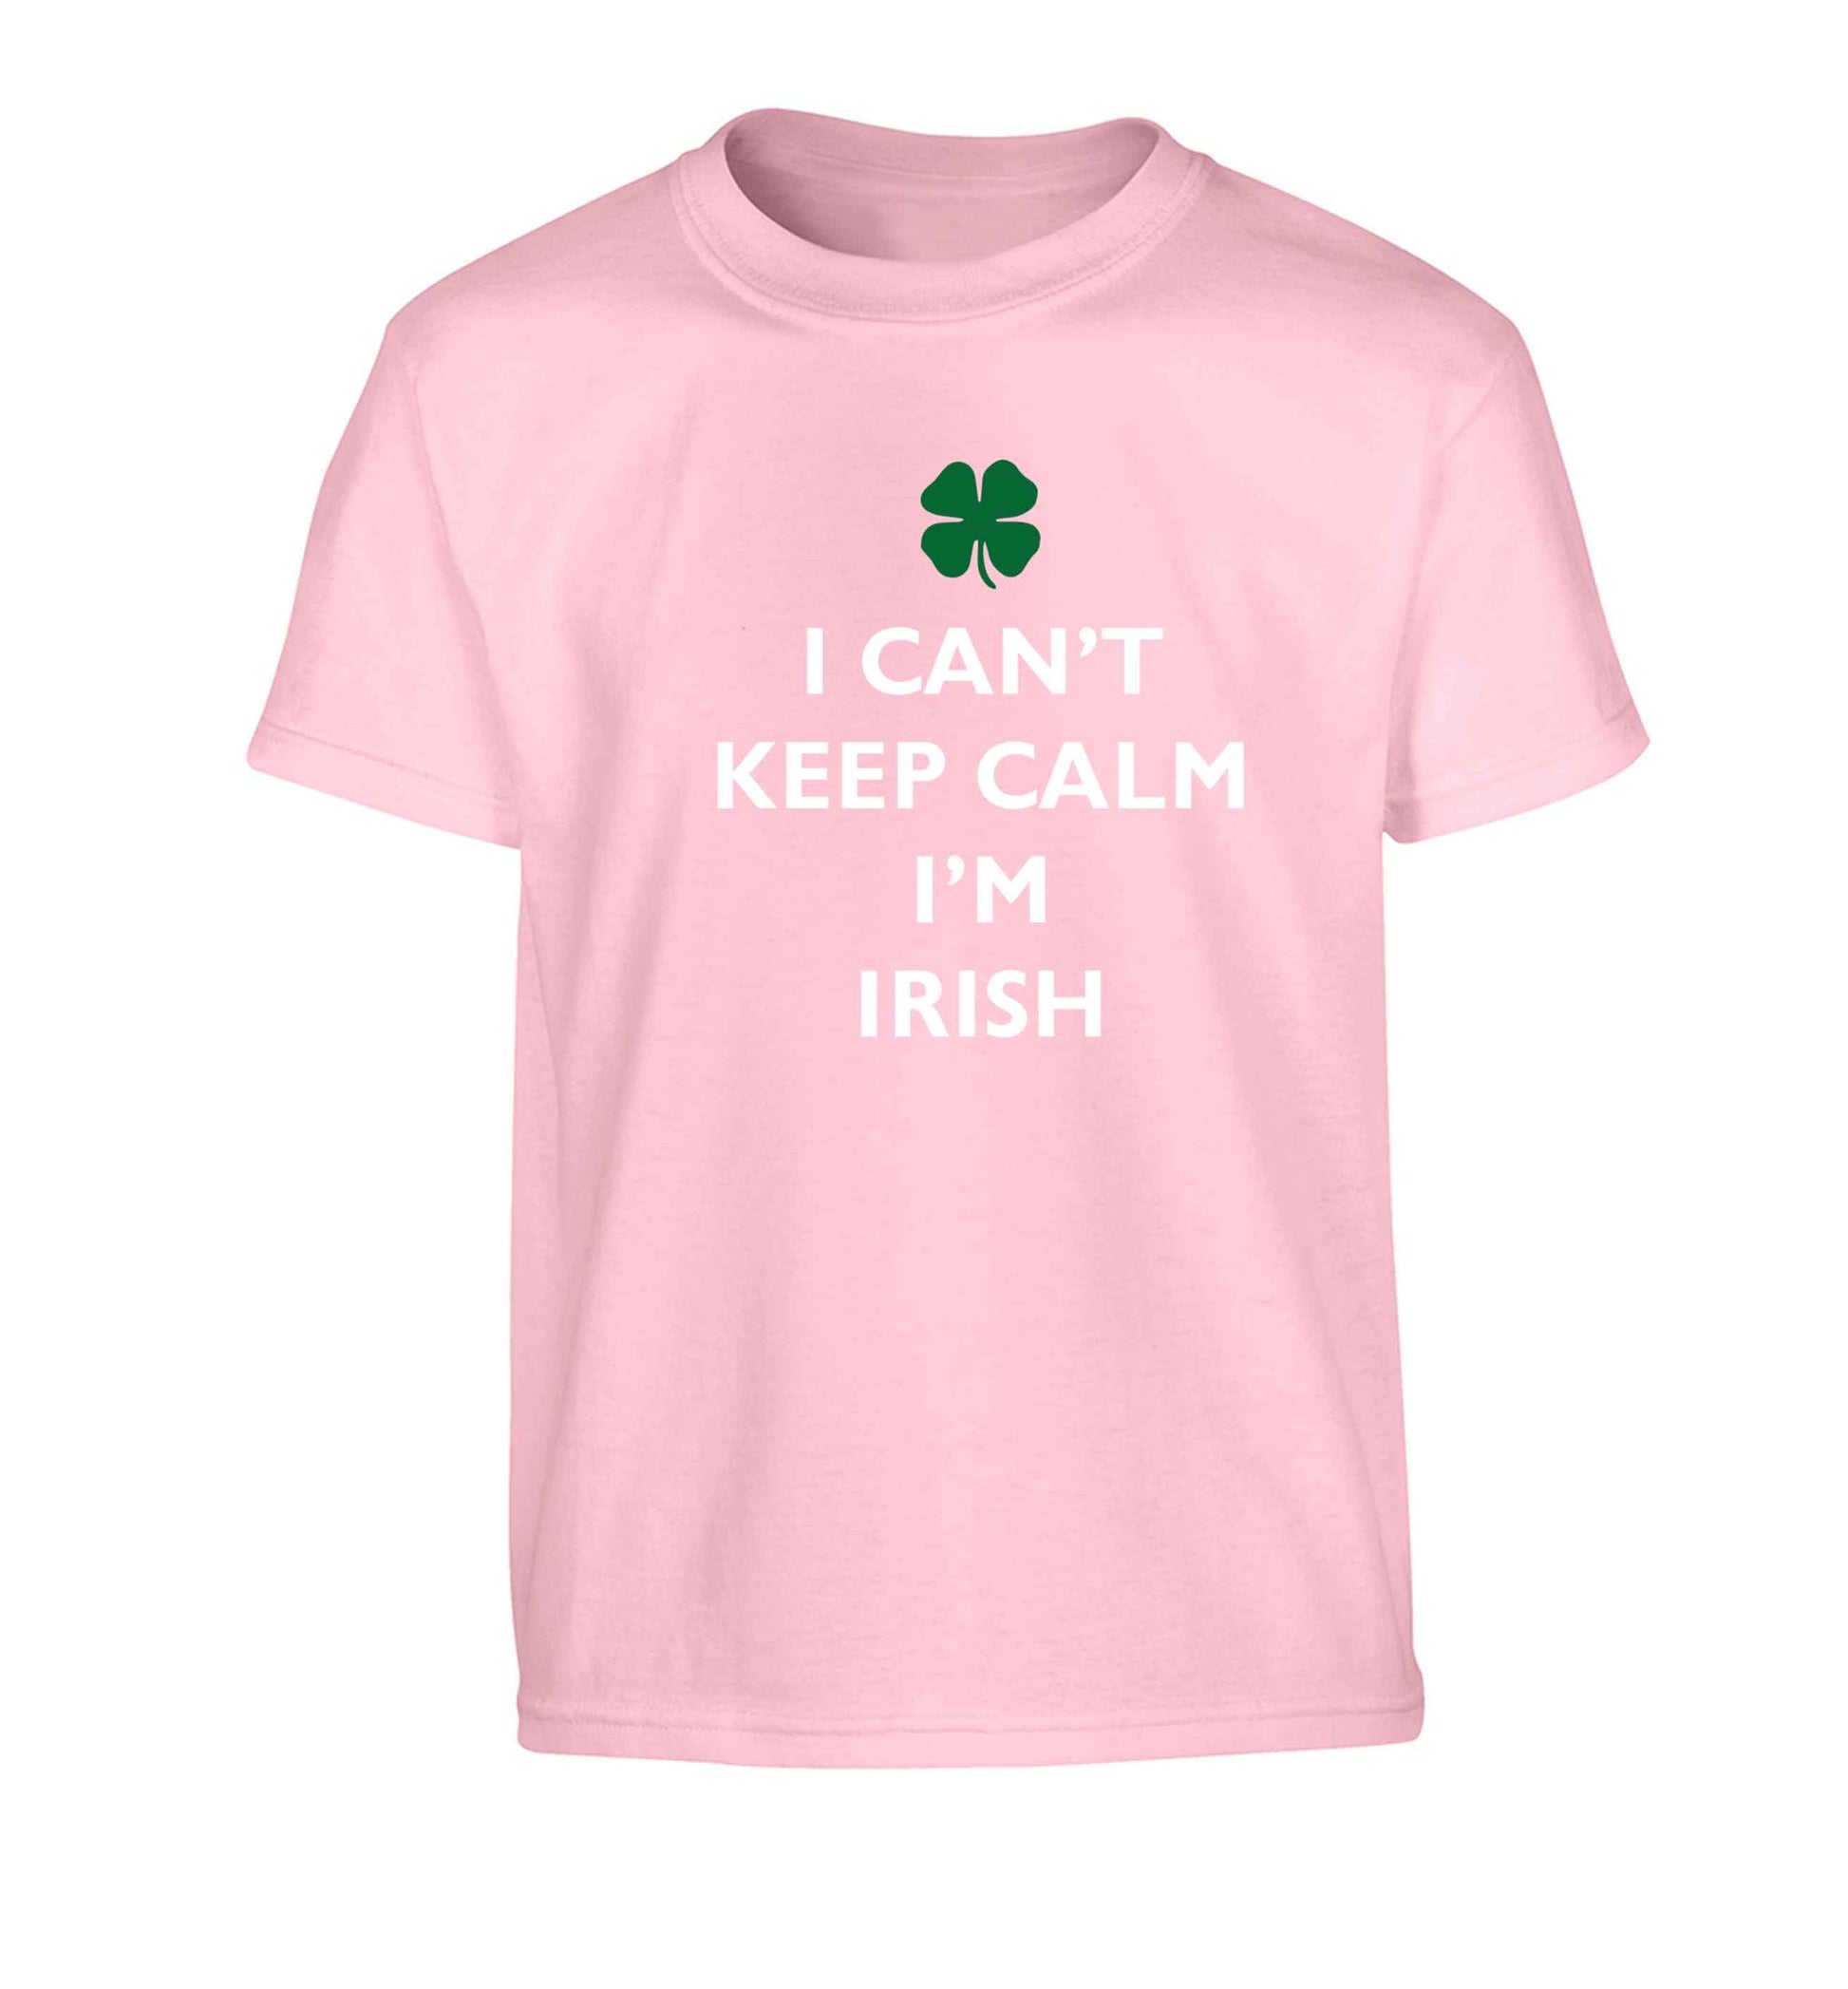 I can't keep calm I'm Irish Children's light pink Tshirt 12-13 Years